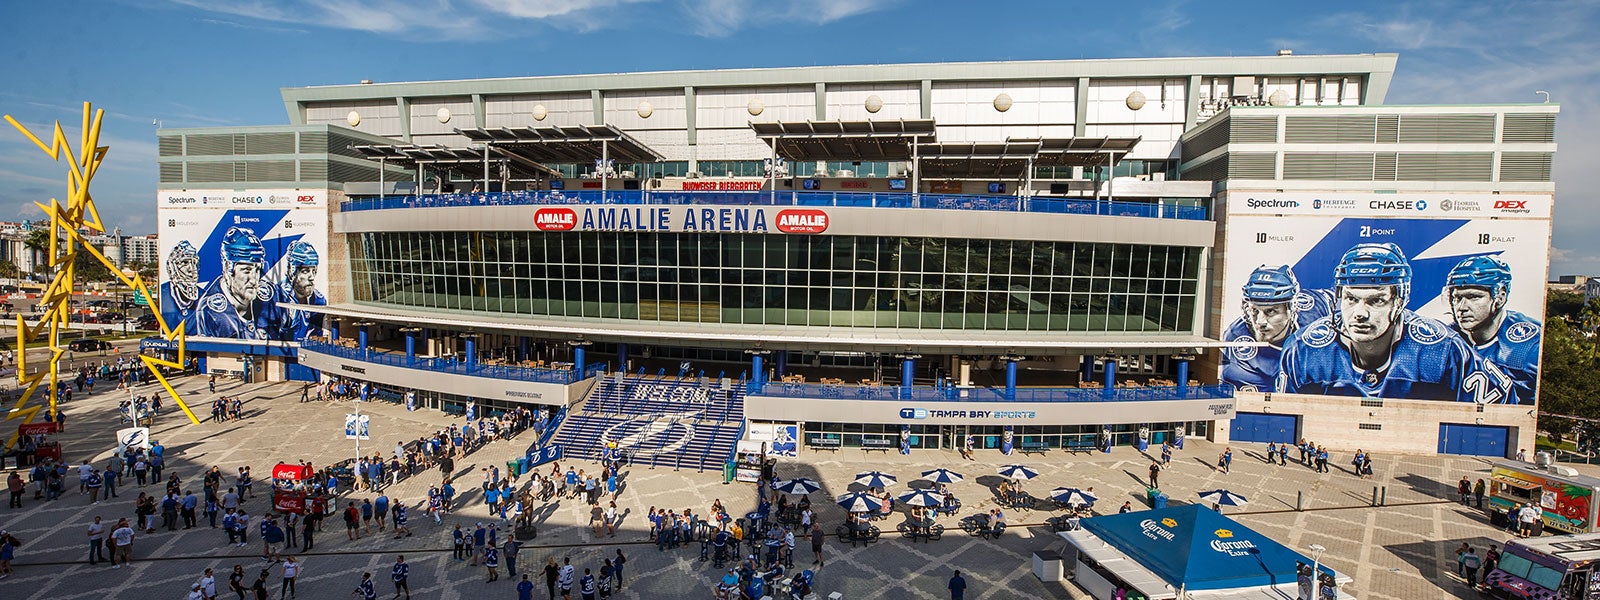 Amalie Arena responds to ESPN report on stadium food violations